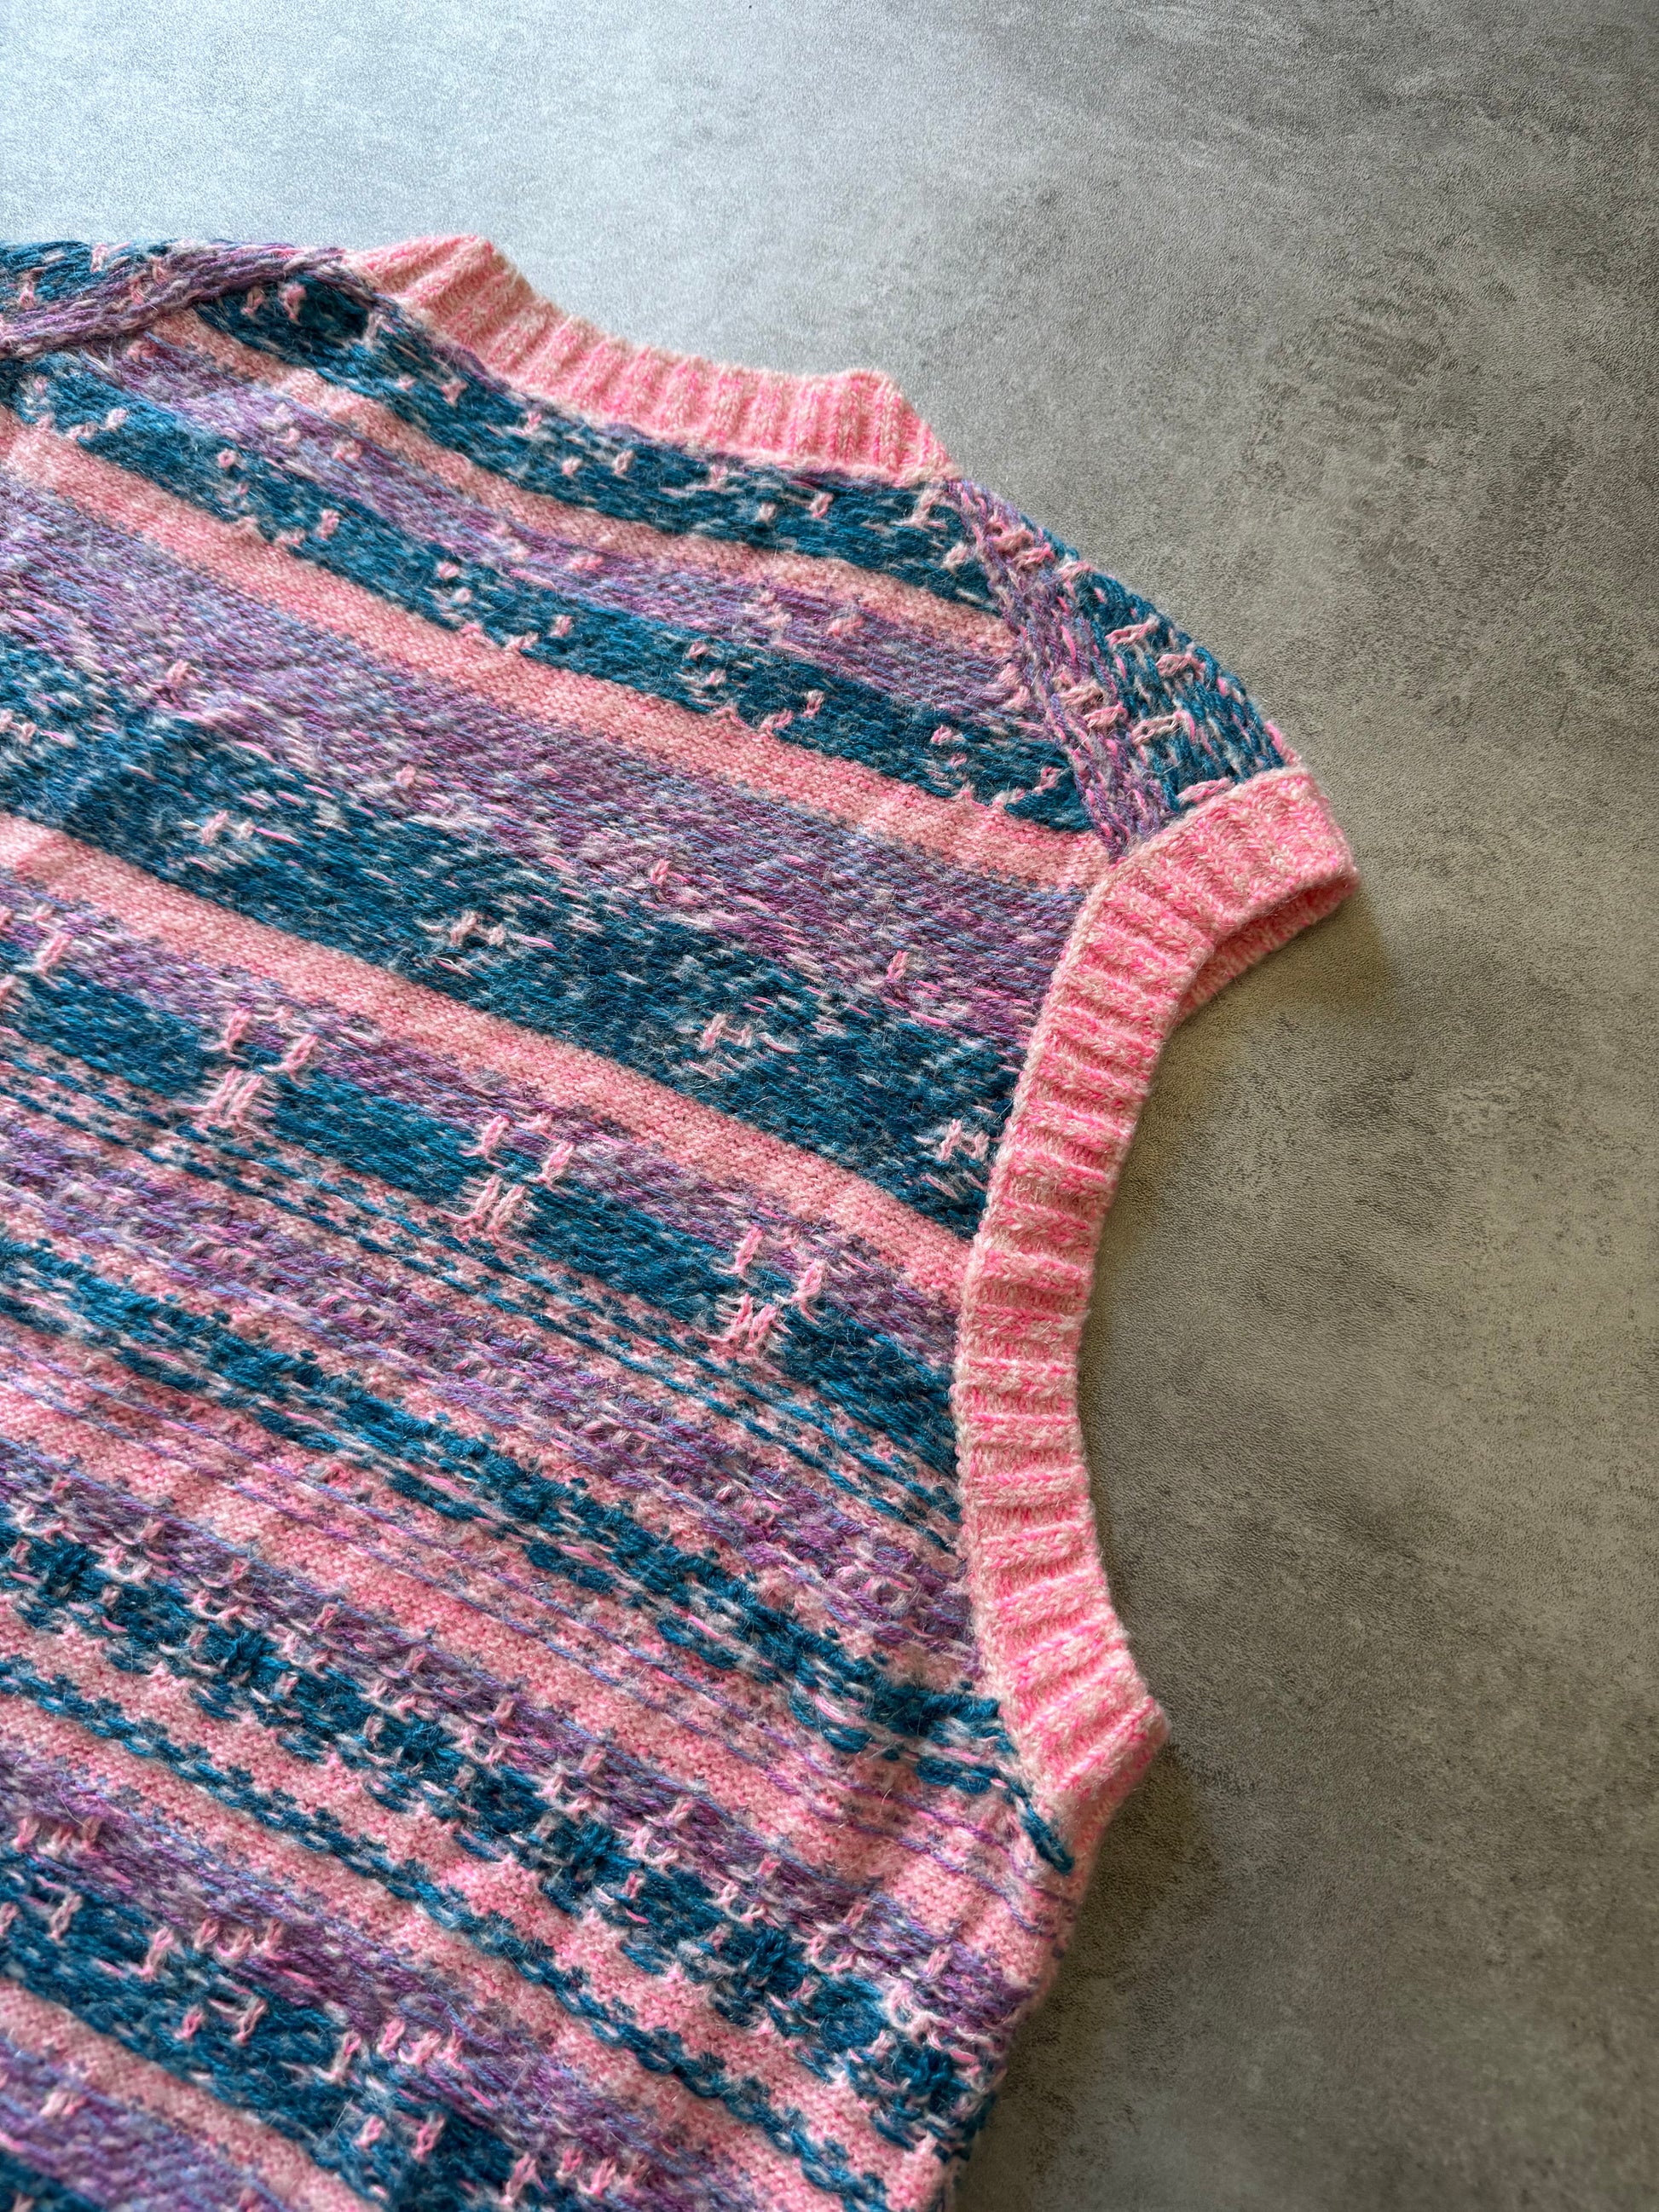 FW2019 Acne Studios Striped Intarsia Knit Pink Jacquard Sleeveless Sweater (XL) - 3